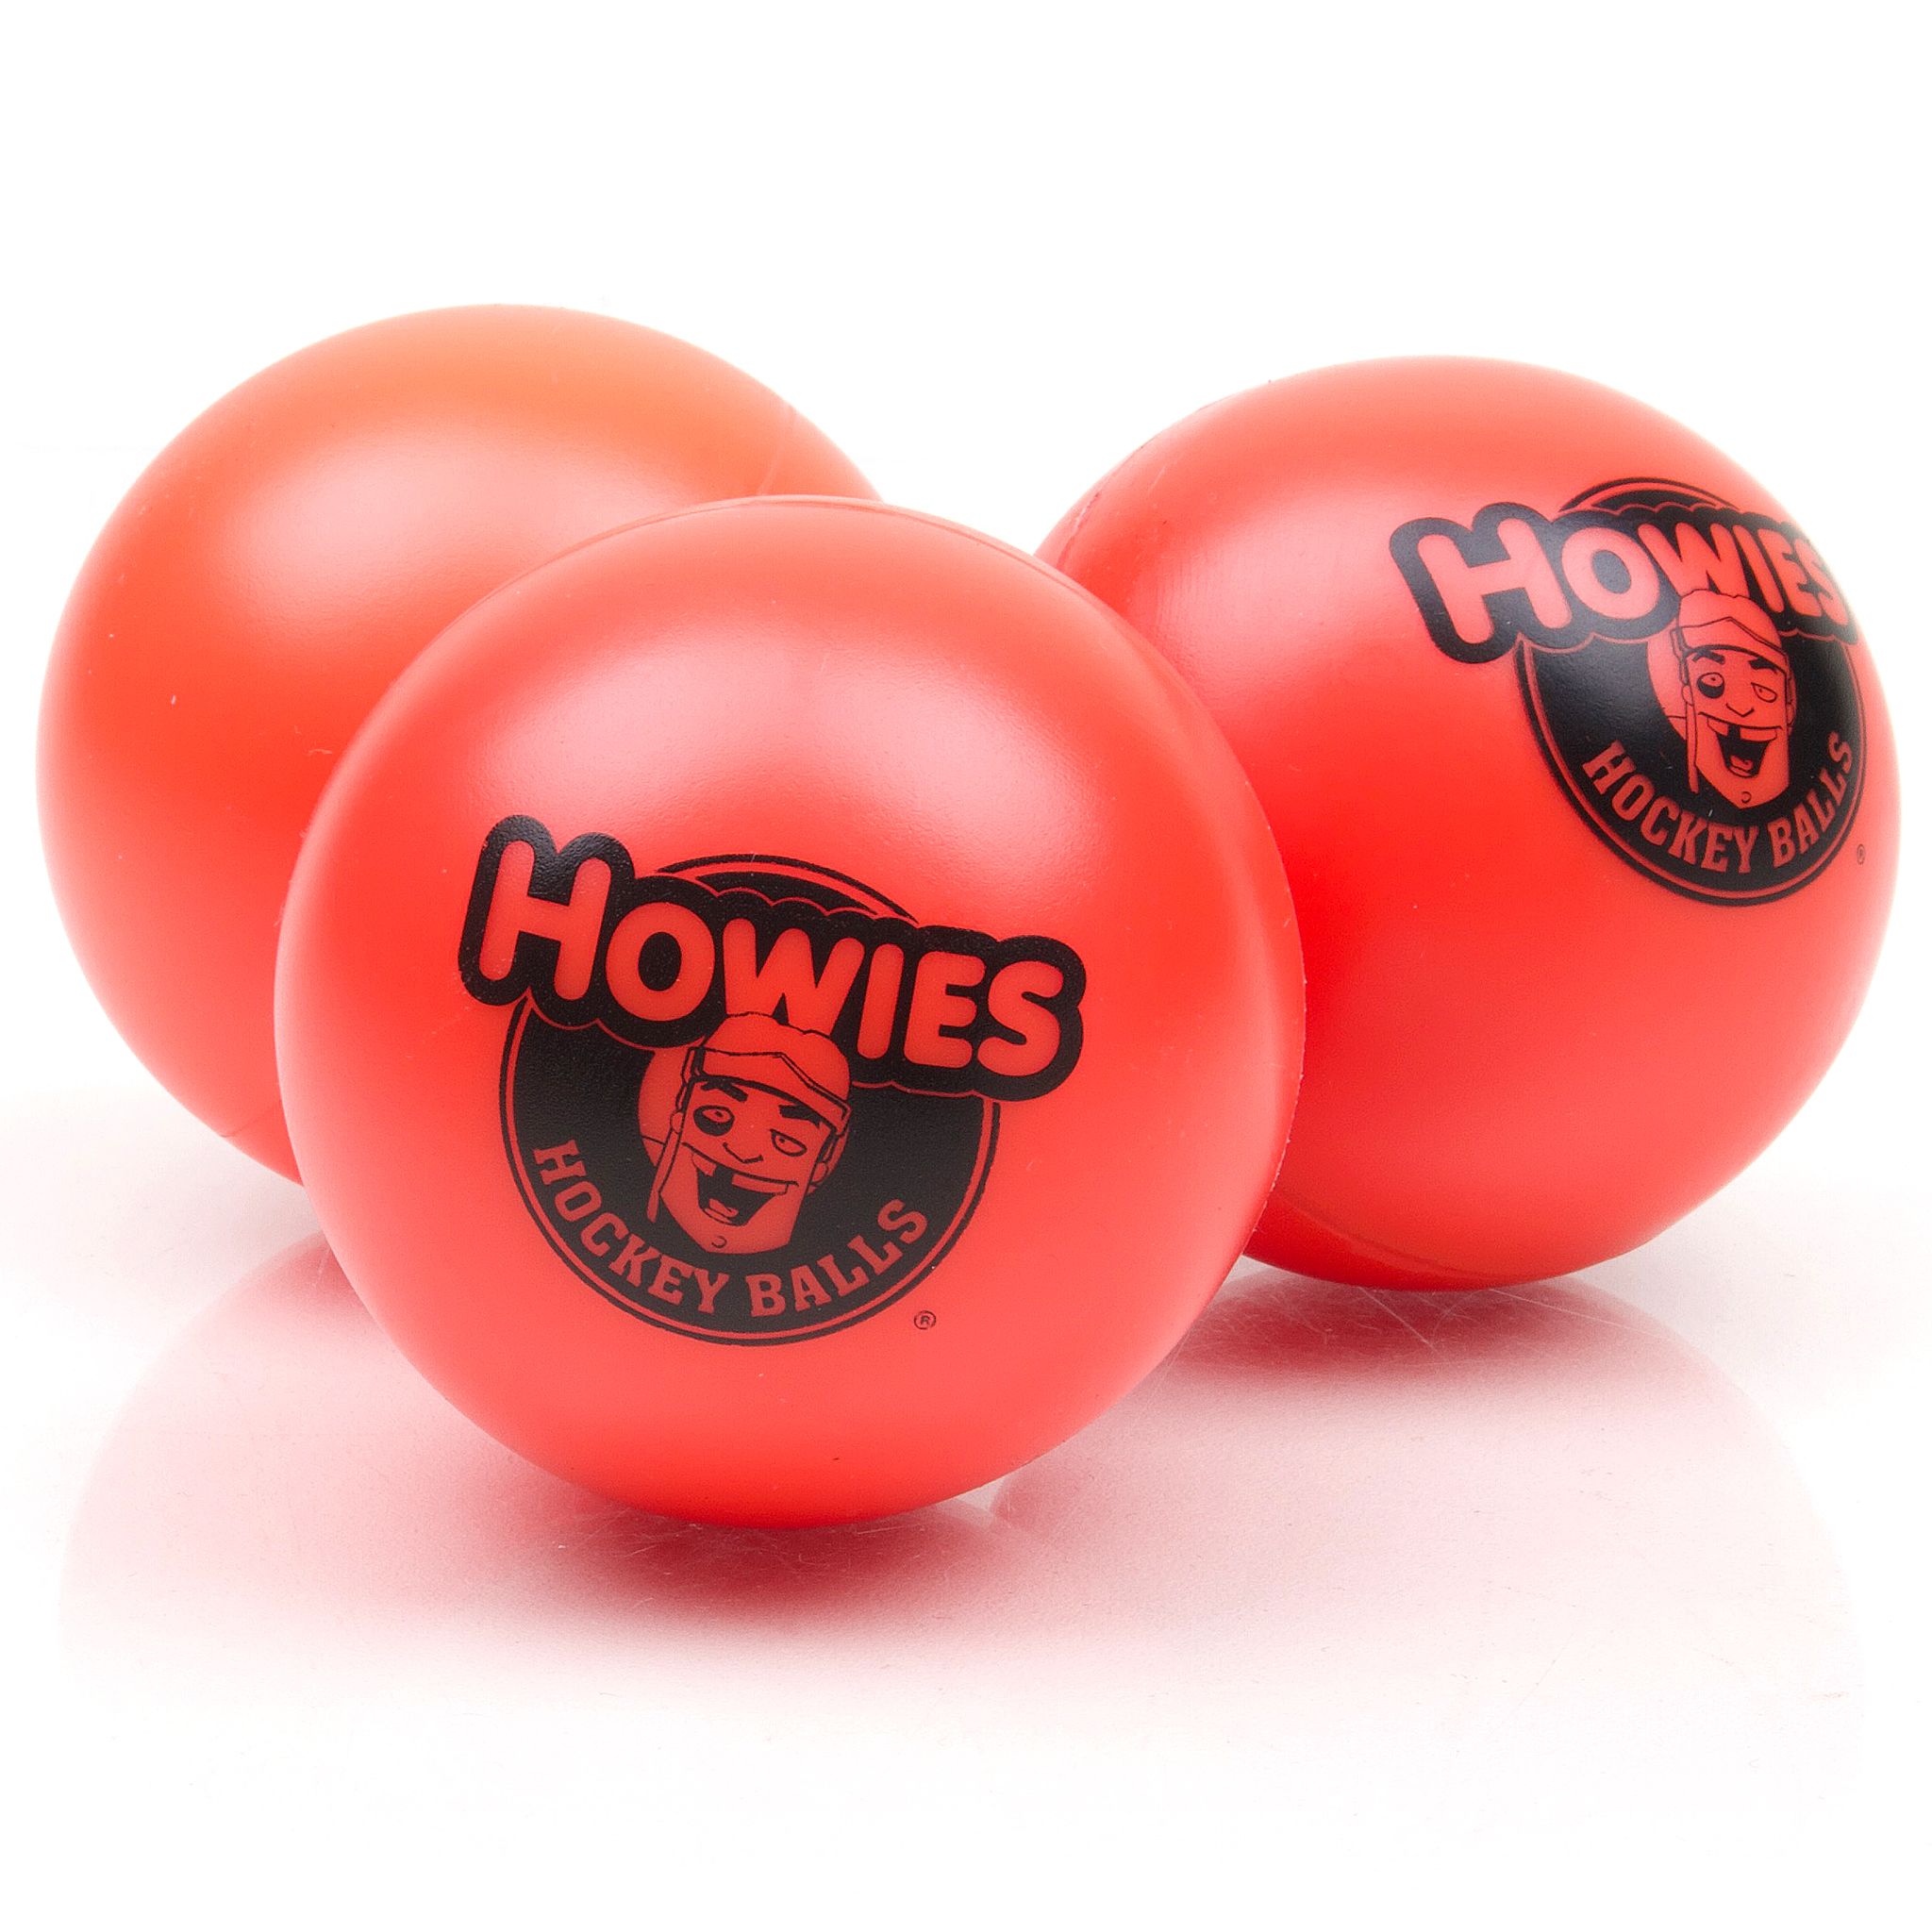 Howies Hockey Balls (3 Pack)